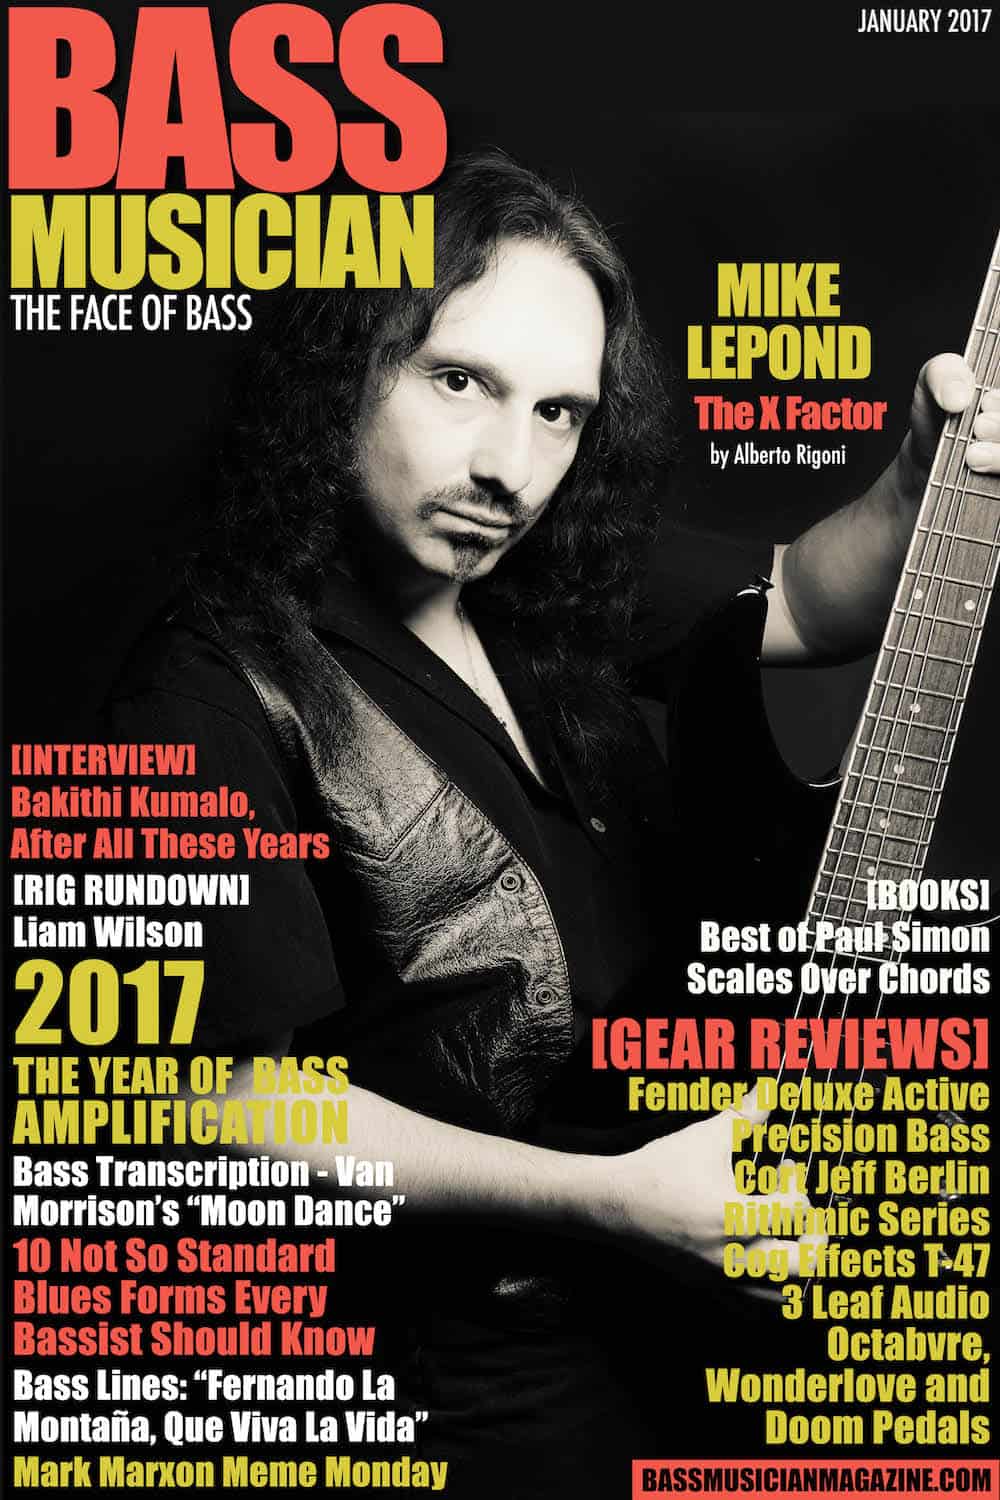 bass-musician-magazine-mike-lepond-january-2017